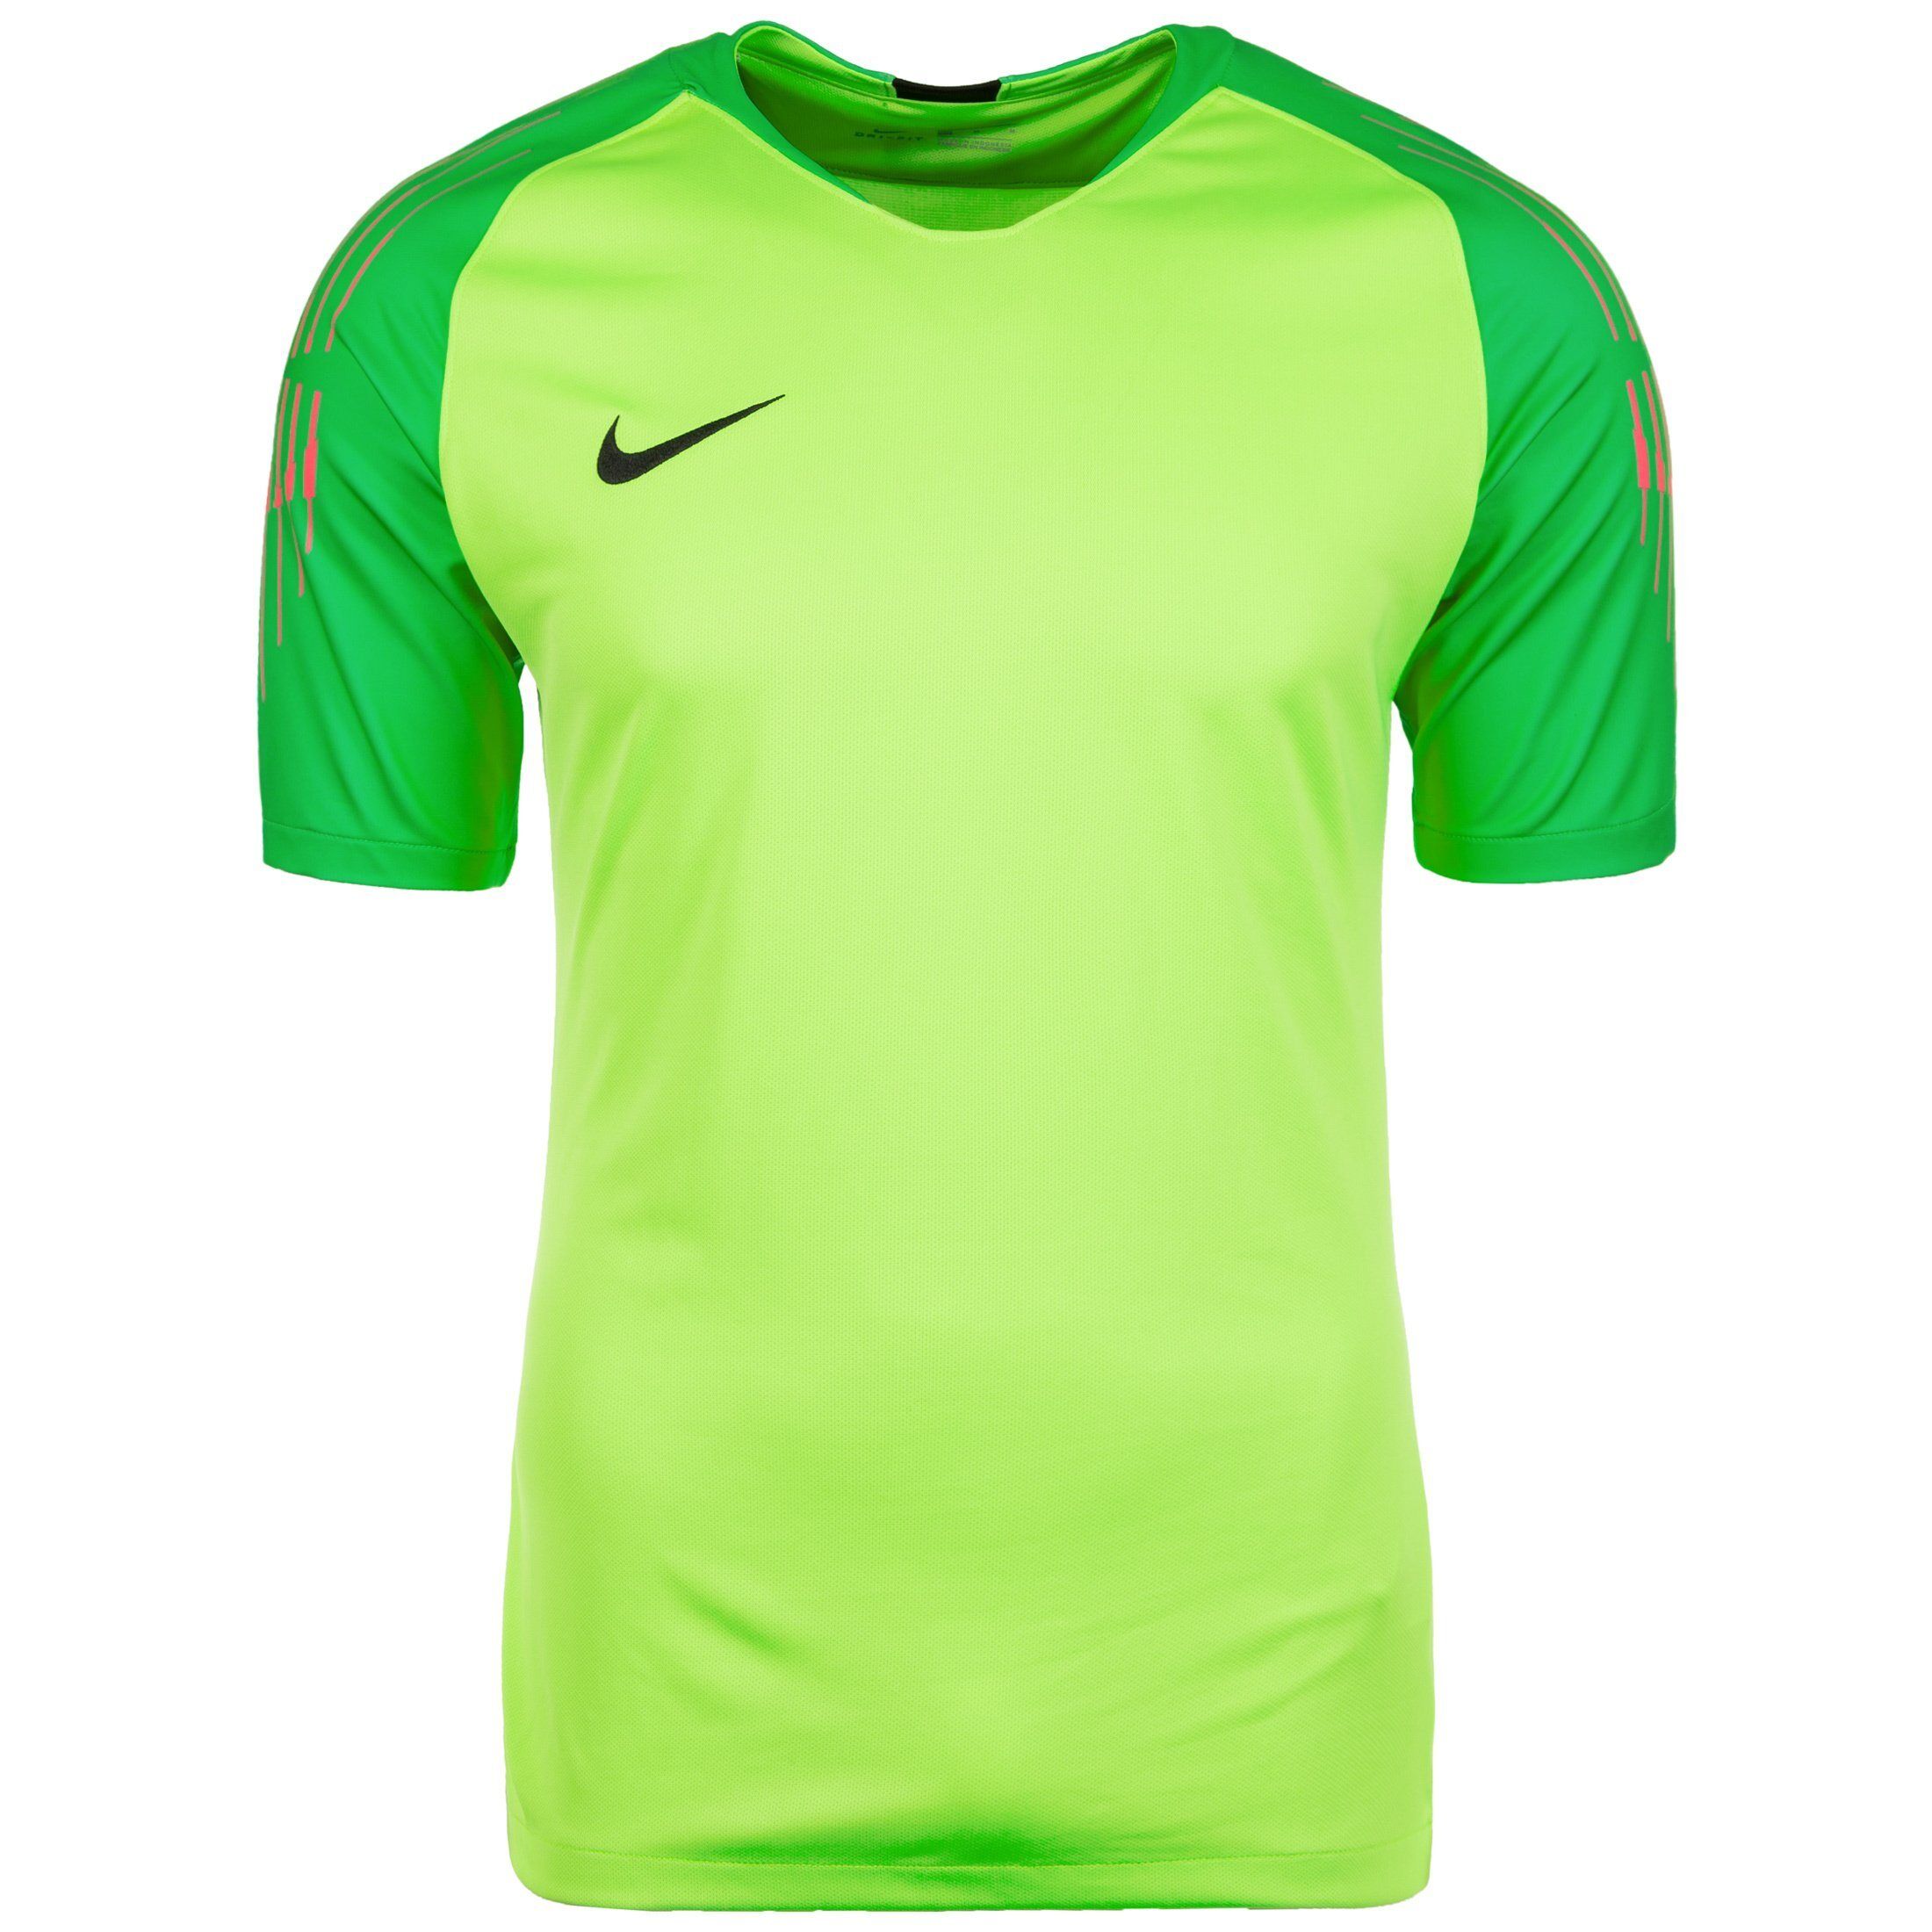 Nike Torwarttrikot »Gardien Ii«, hellgrün